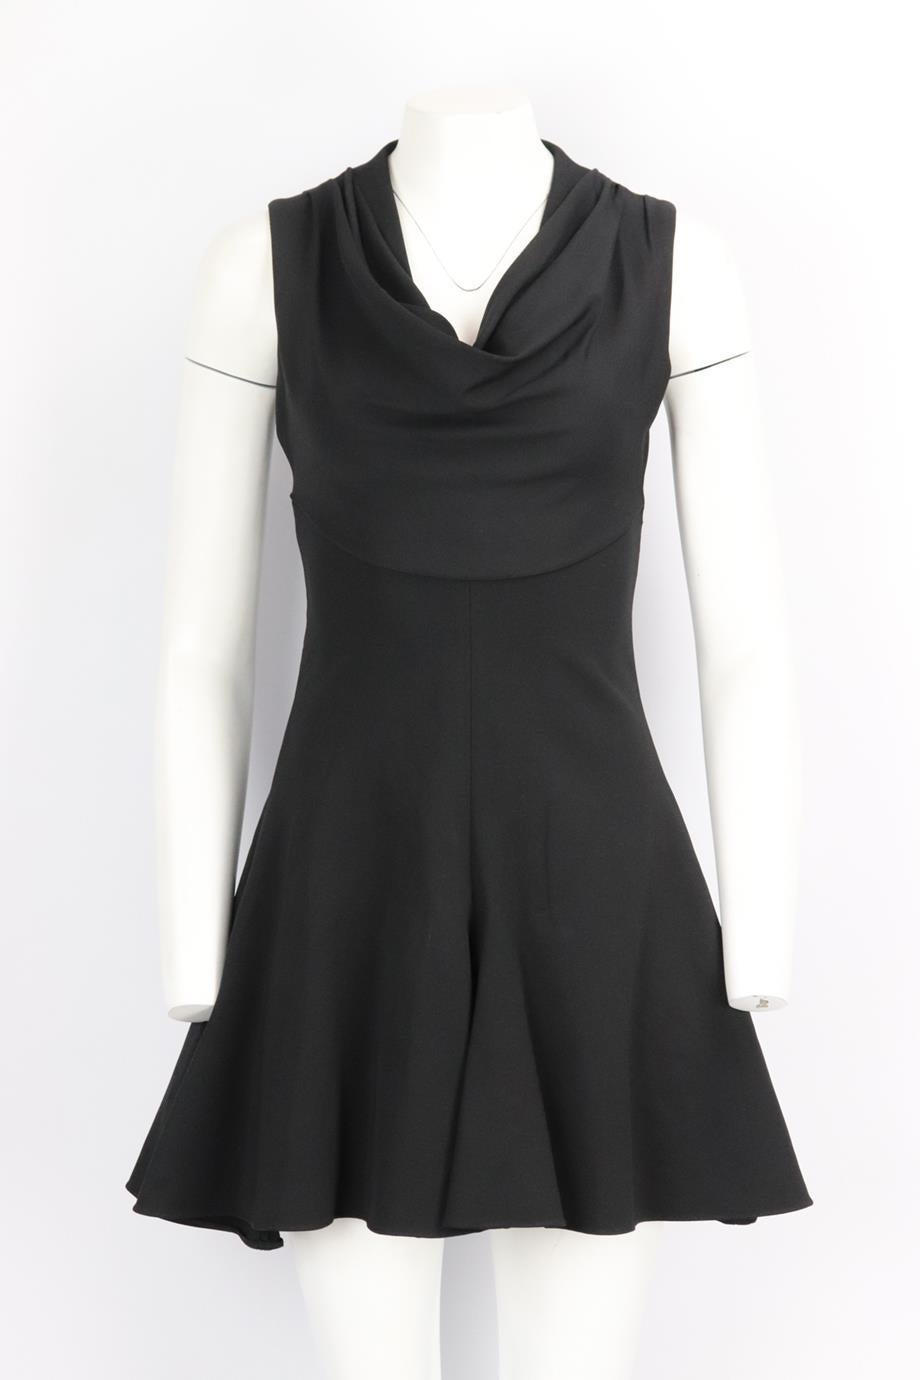 Cushnie et Ochs draped stretch jersey mini dress. Black. Sleeveless, cowl neck. Zip fastening at back. 85% Viscose, 9% nylon, 6% elastane; fabric2: 95% polyester, 5% elastane; lining: 93% silk, 7% elastane. Size: US 4 (UK 8, FR 36, IT 40). Bust: 32